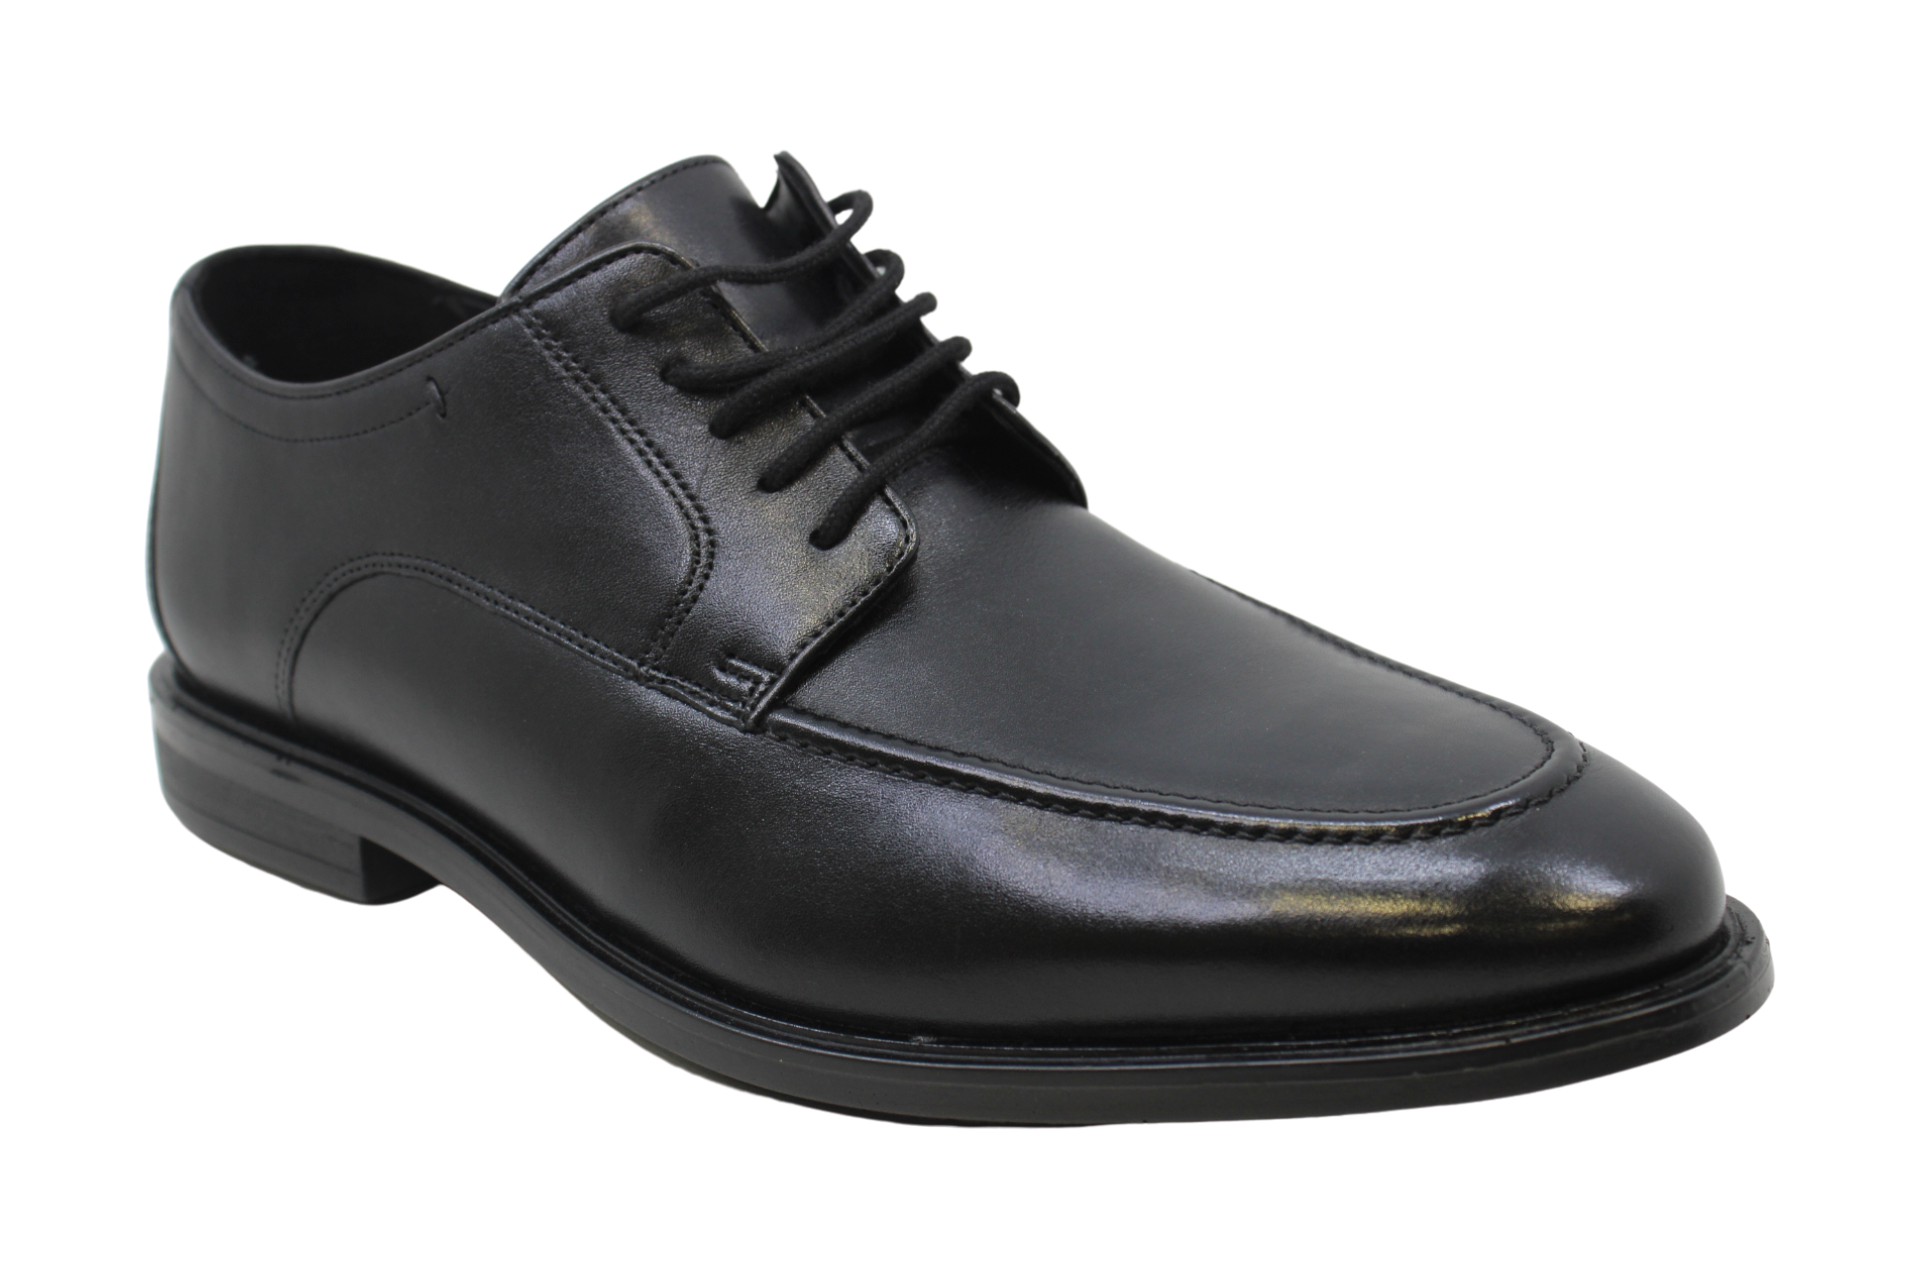 Bostonian Mens Oxfords, Dress Shoes in Black Color, Size 8 KHV ...